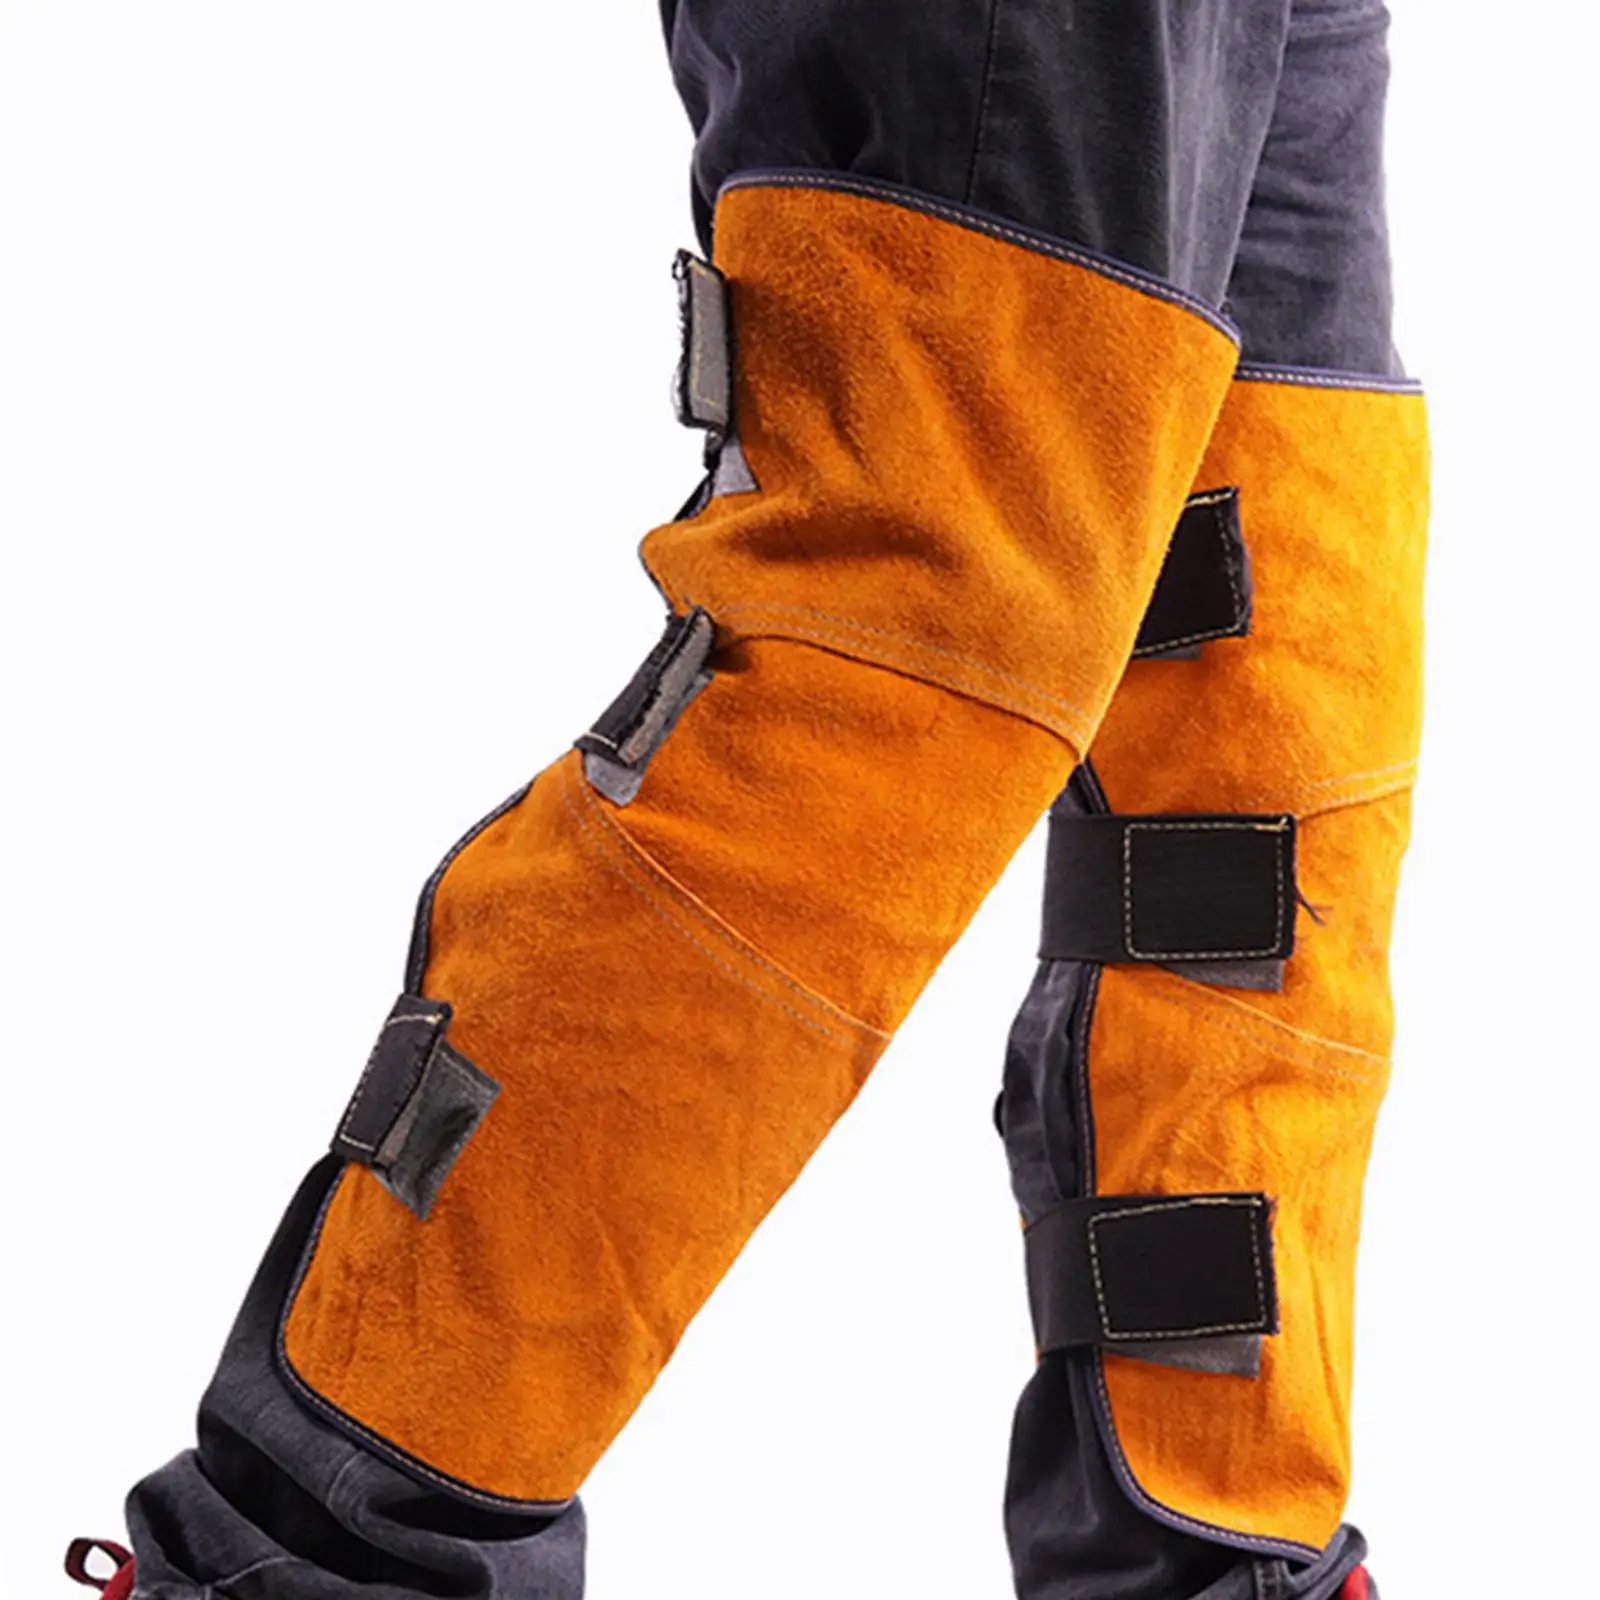 Welding Leg Covers Comfortable Fireproof Anti Scald Women Men Reinforced Heat Resistant Knee Pads Knee Protector Protective Case